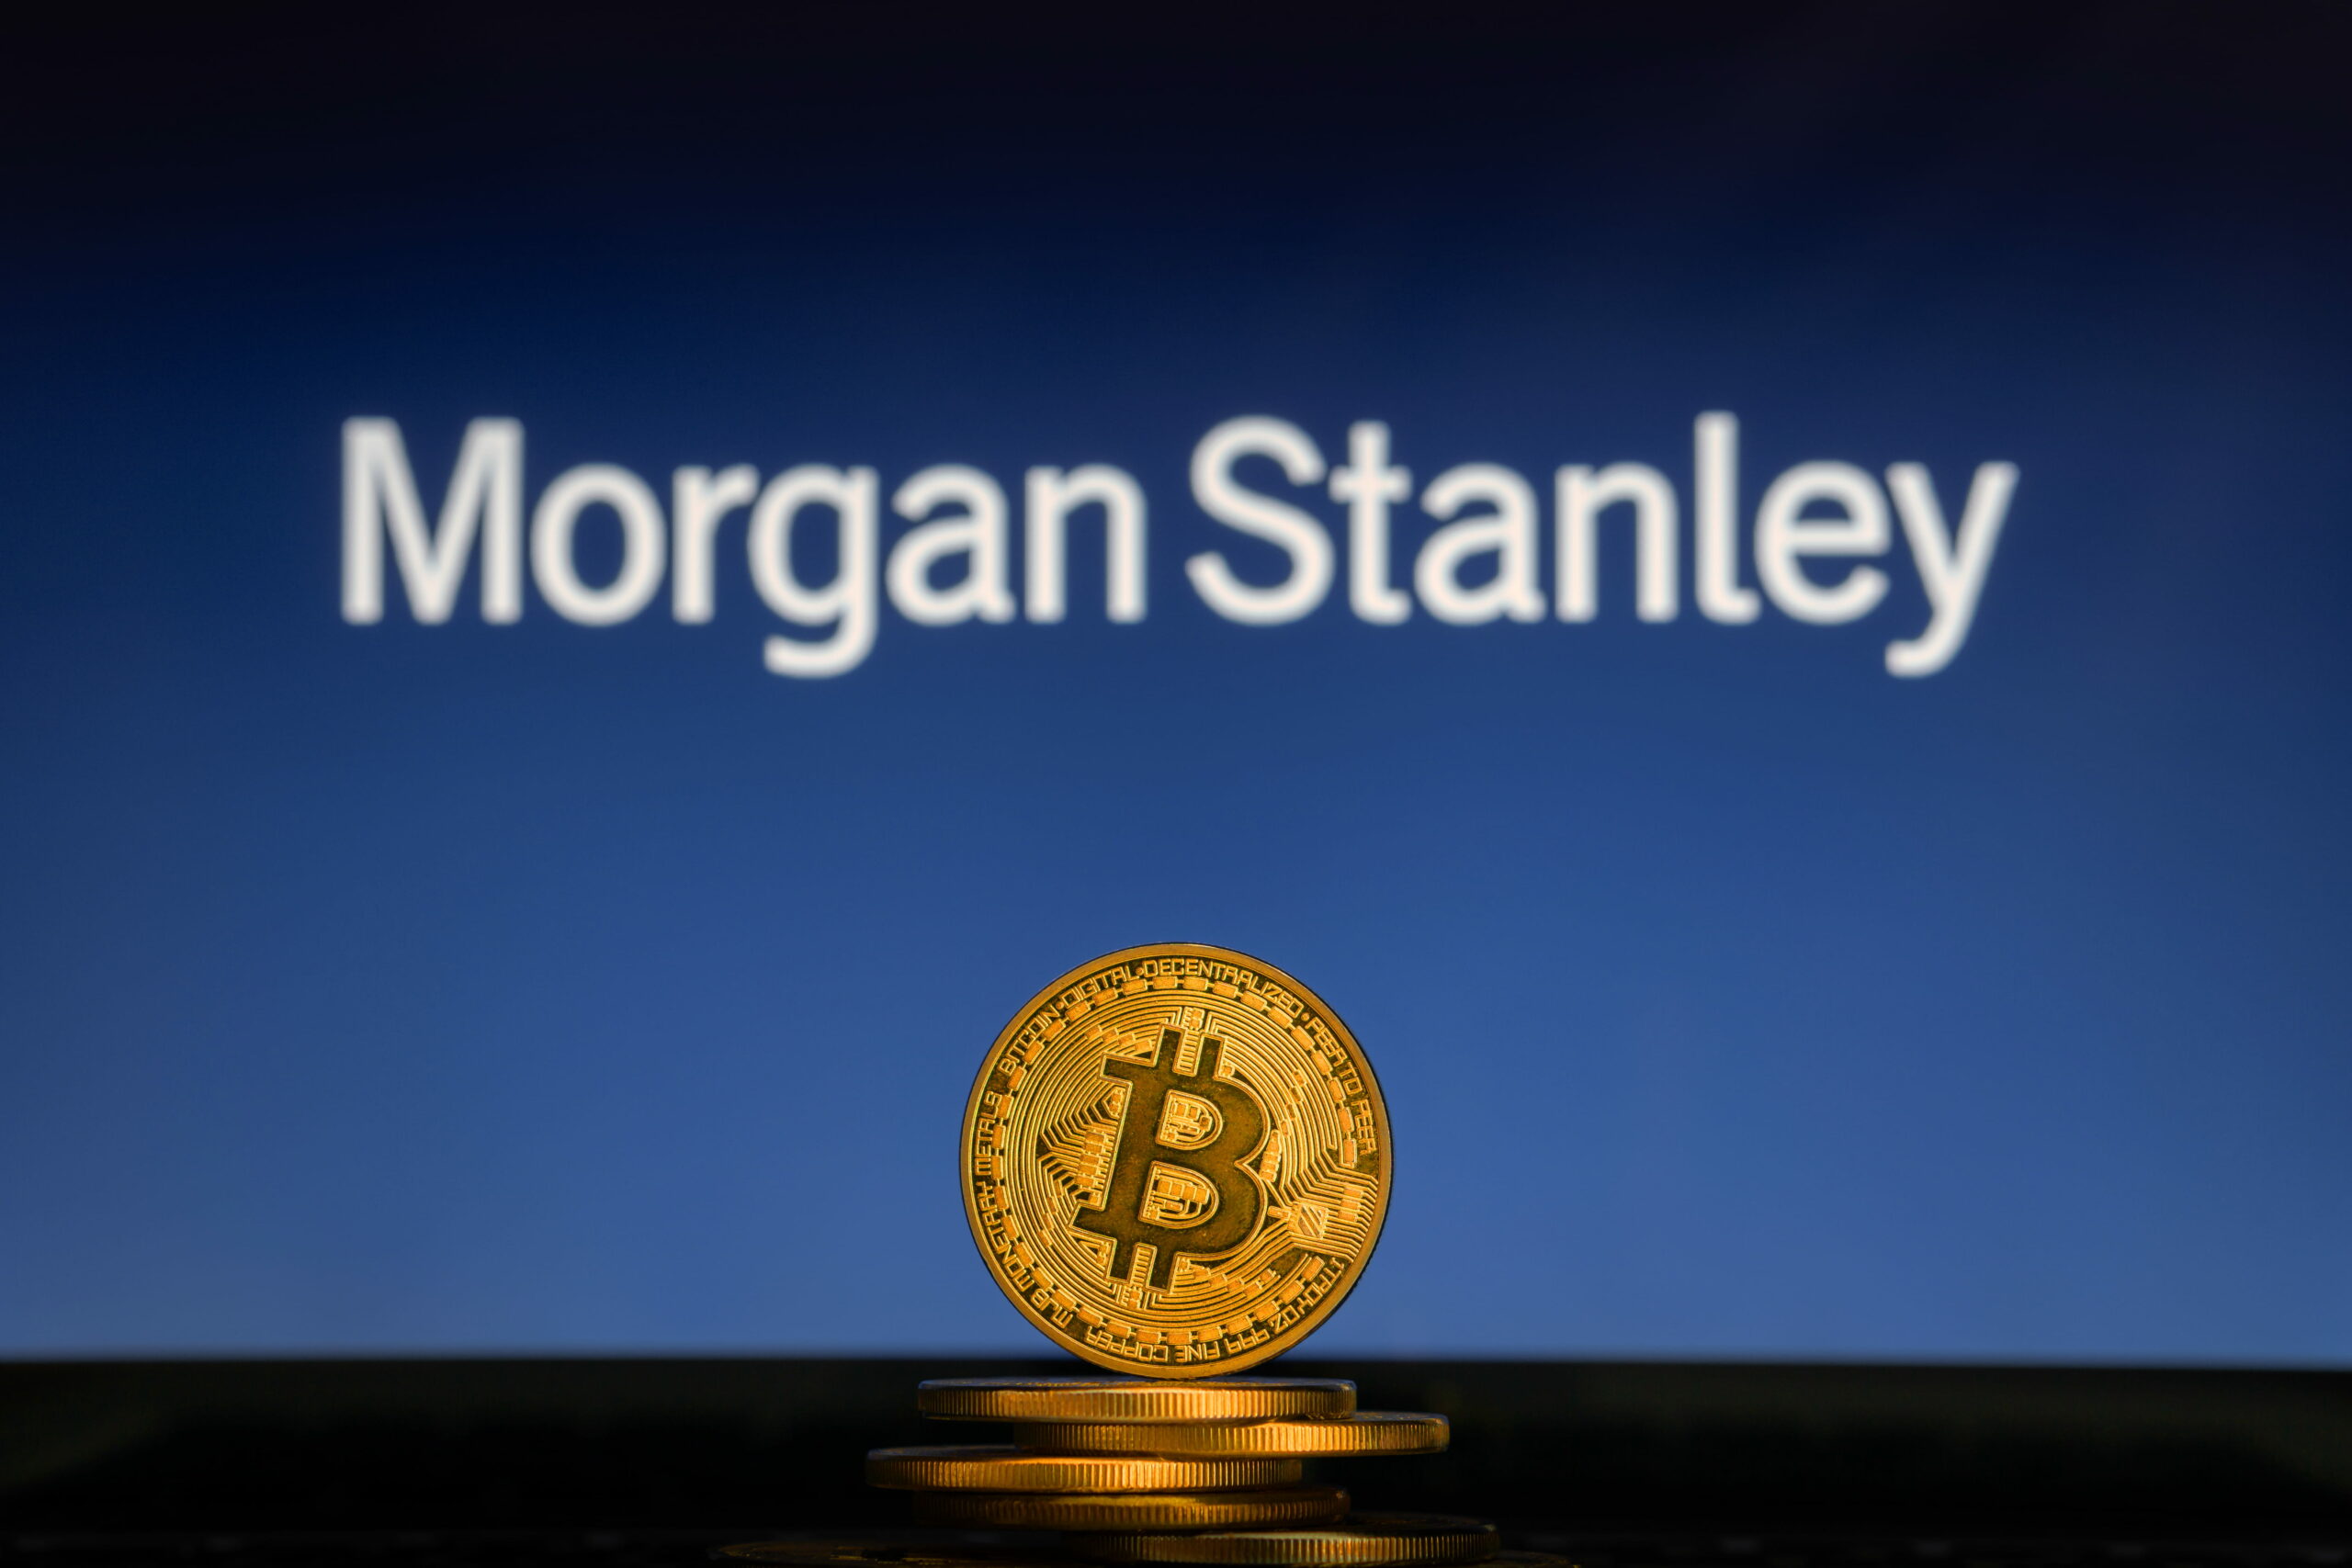 Bitcoin Stalls as Morgan Stanley Increases Its BTC Exposure